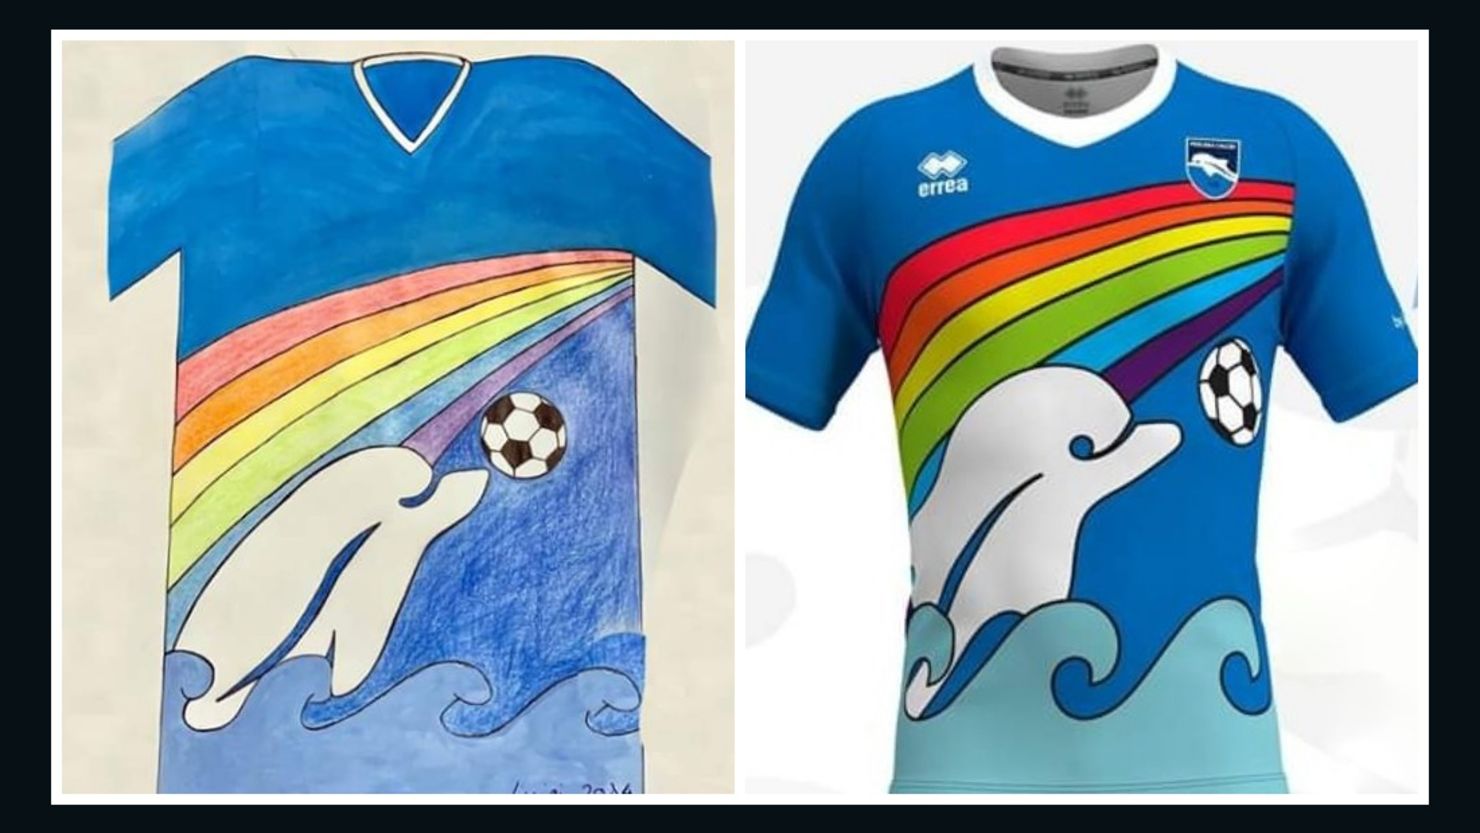 Luigi D'Agostino's winning design depicts a dolphin in the sea, Pescara's club symbol.